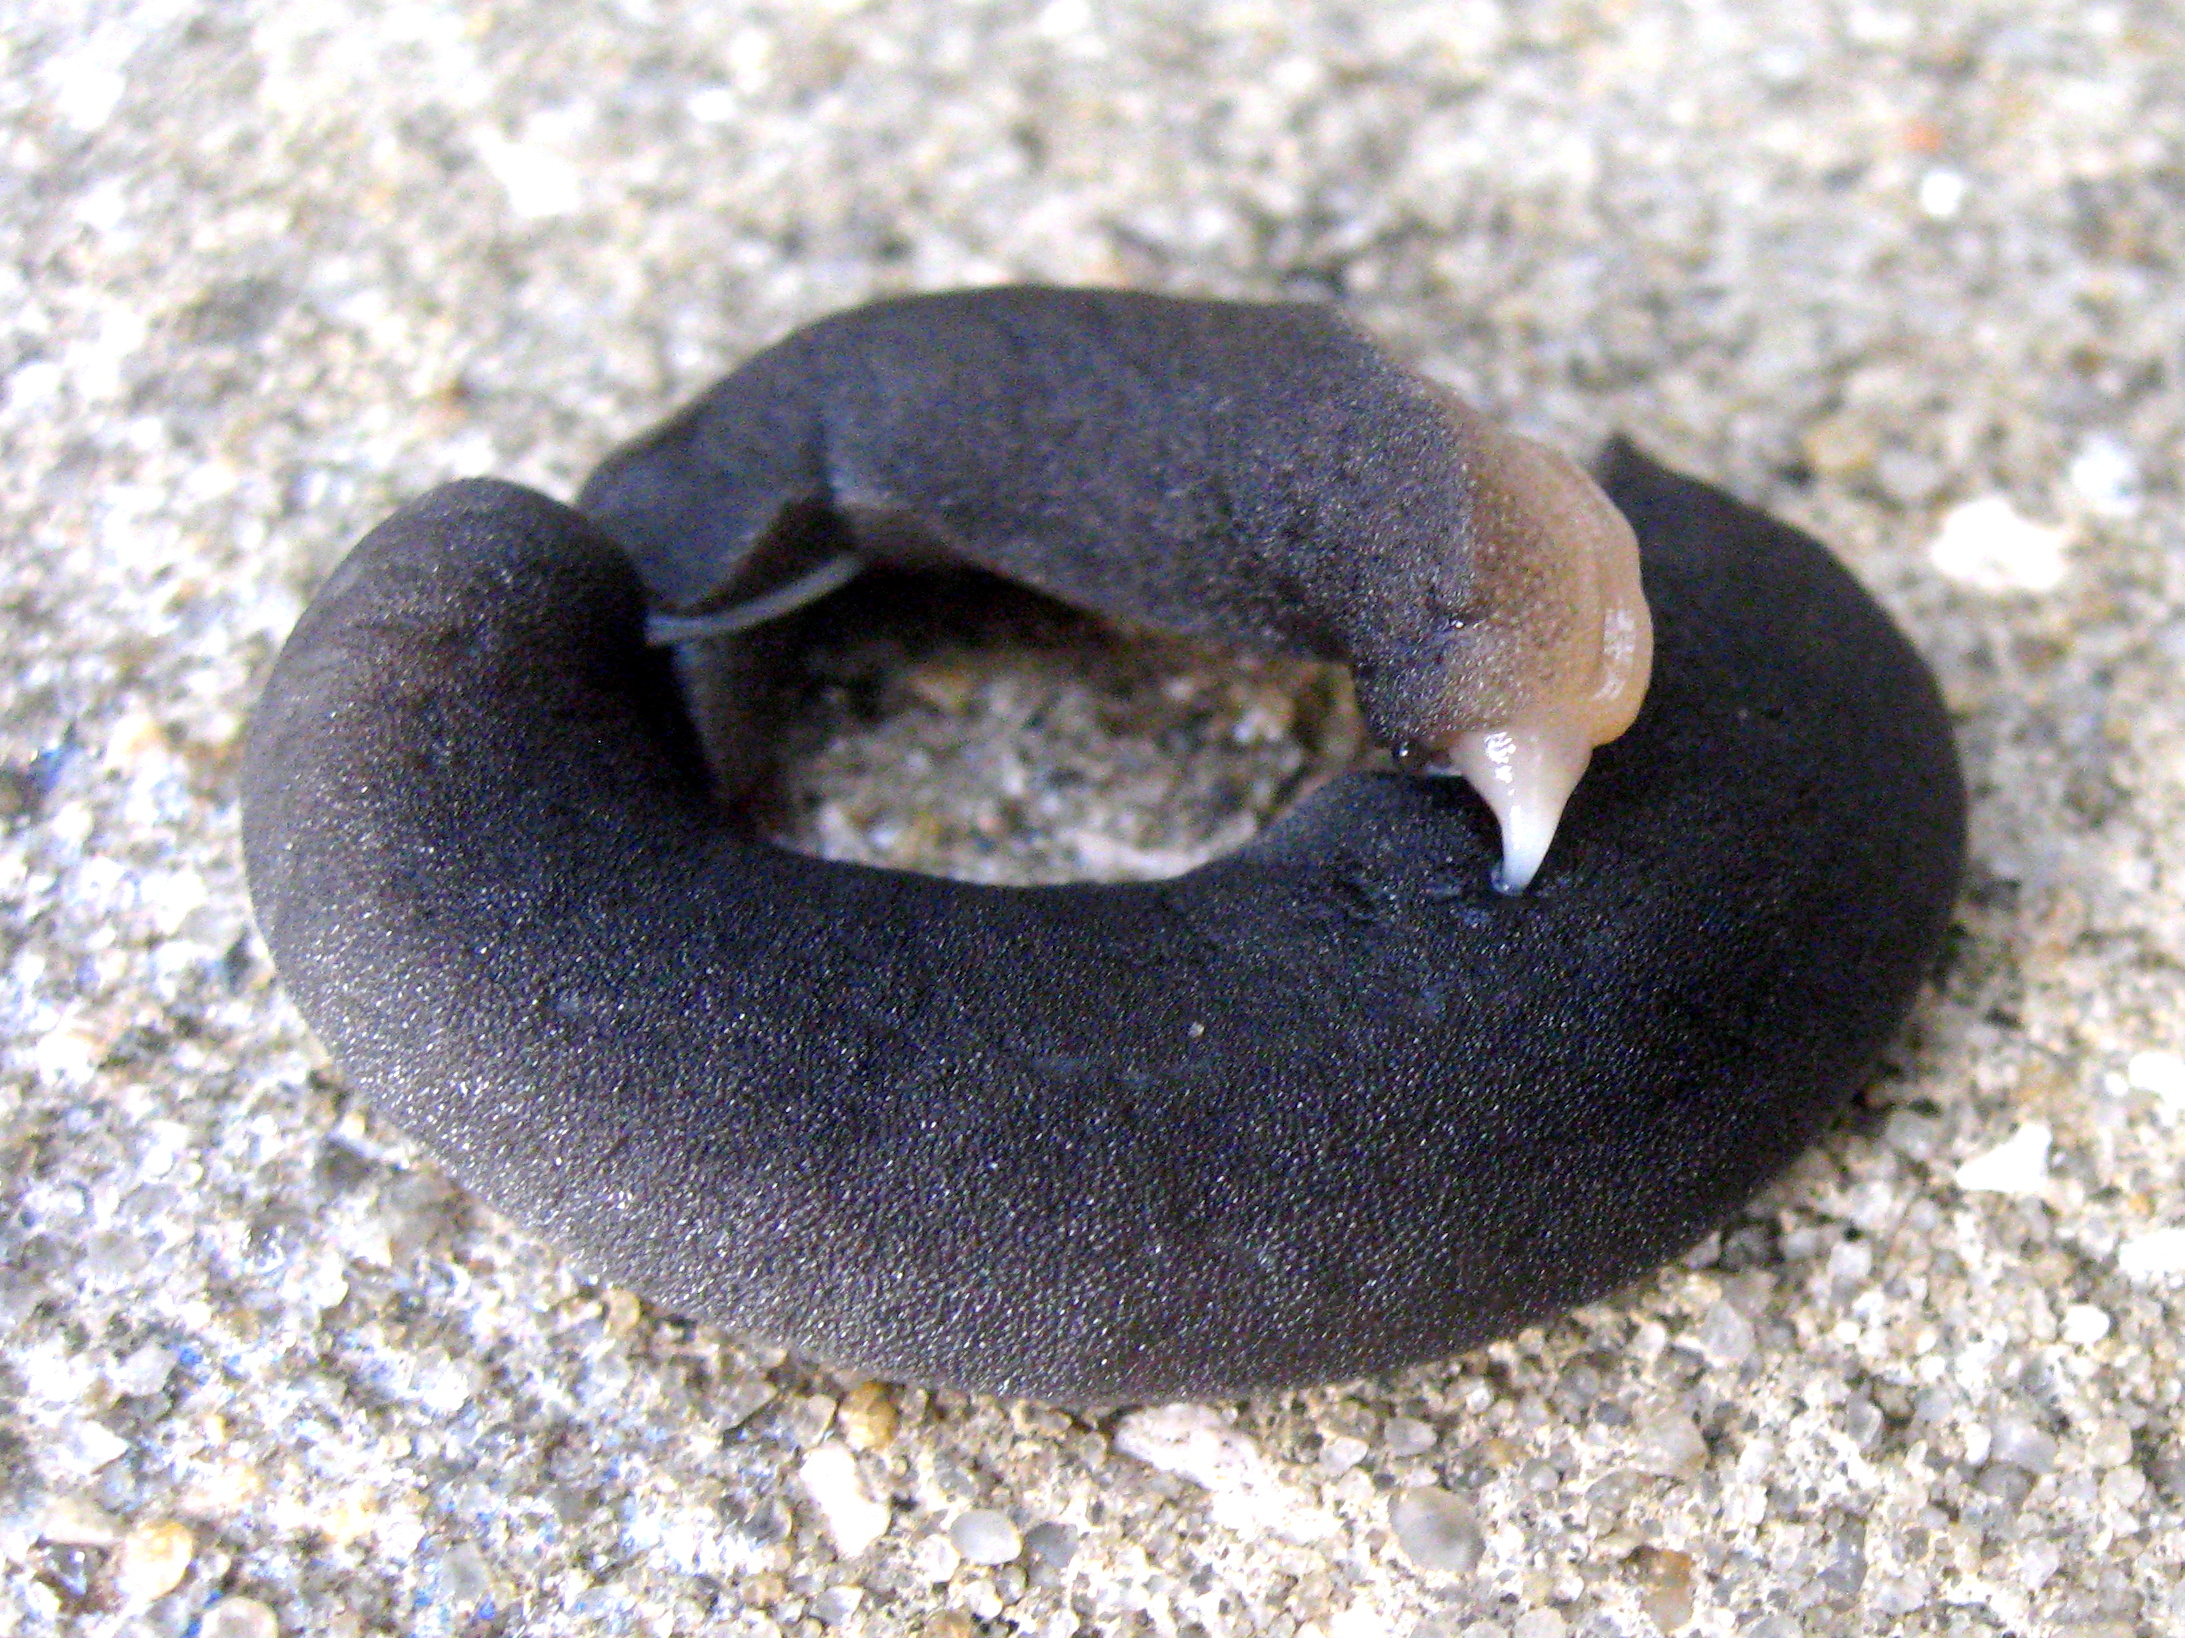 Two black leatherleaf slugs curled up mating on concrete.